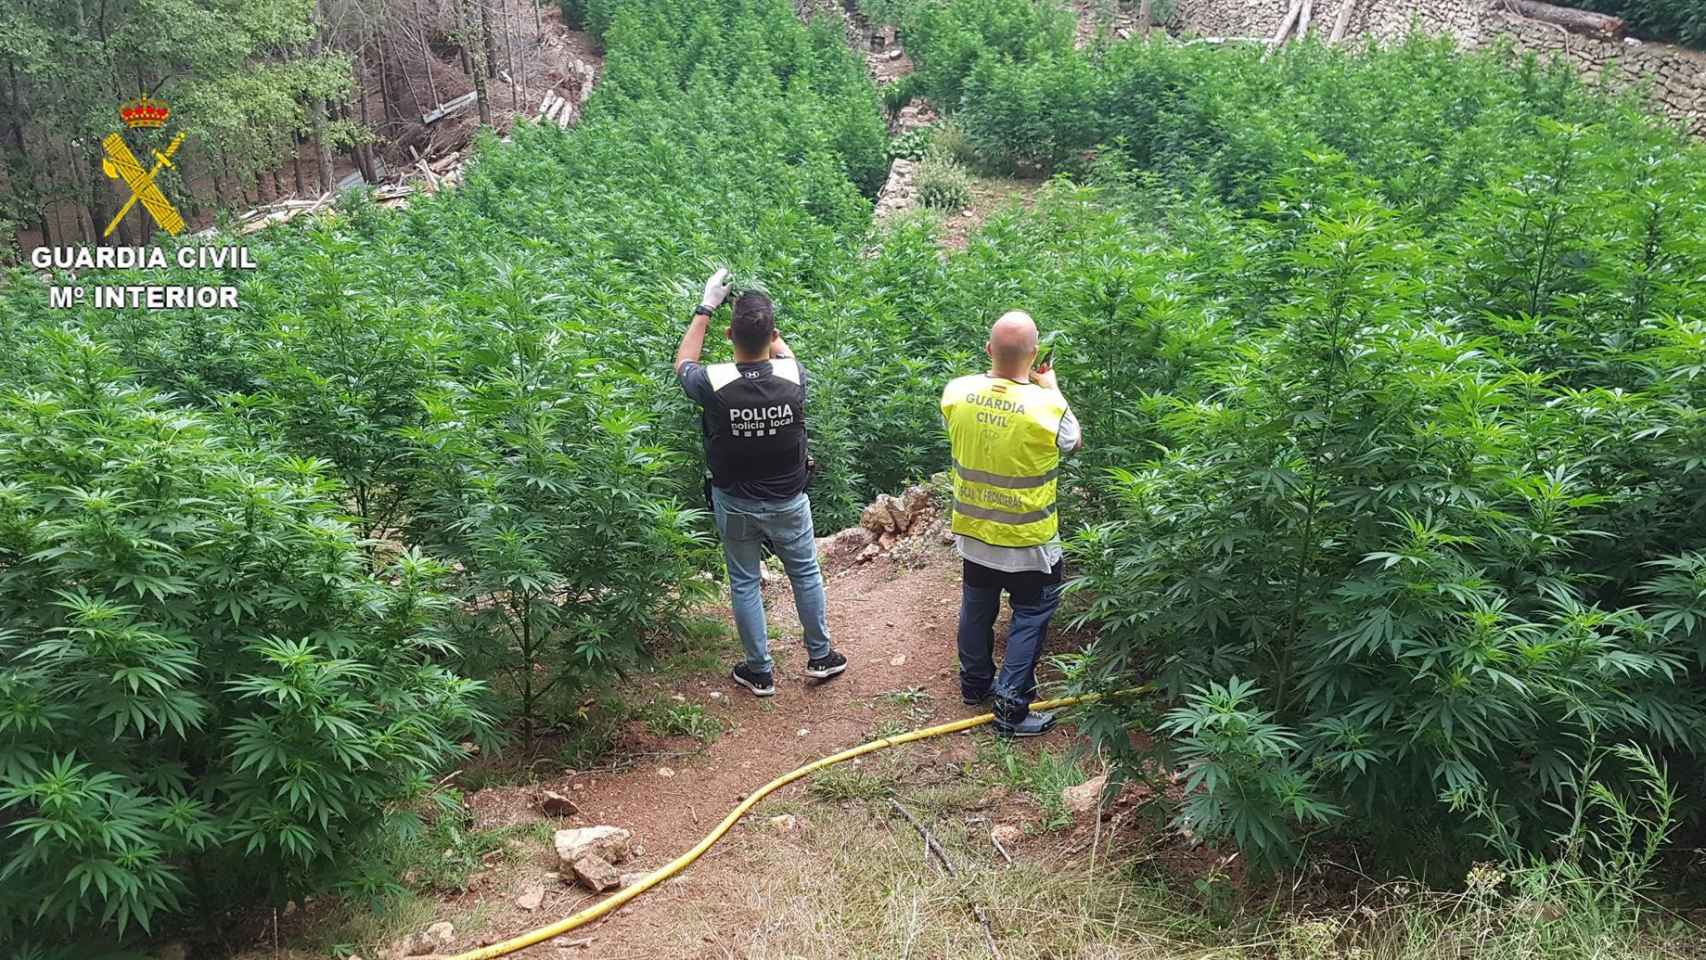 Plantación de marihuana desmantelada en una zona rural del municipio de Vandellòs-Hospitalet / GUARDIA CIVIL